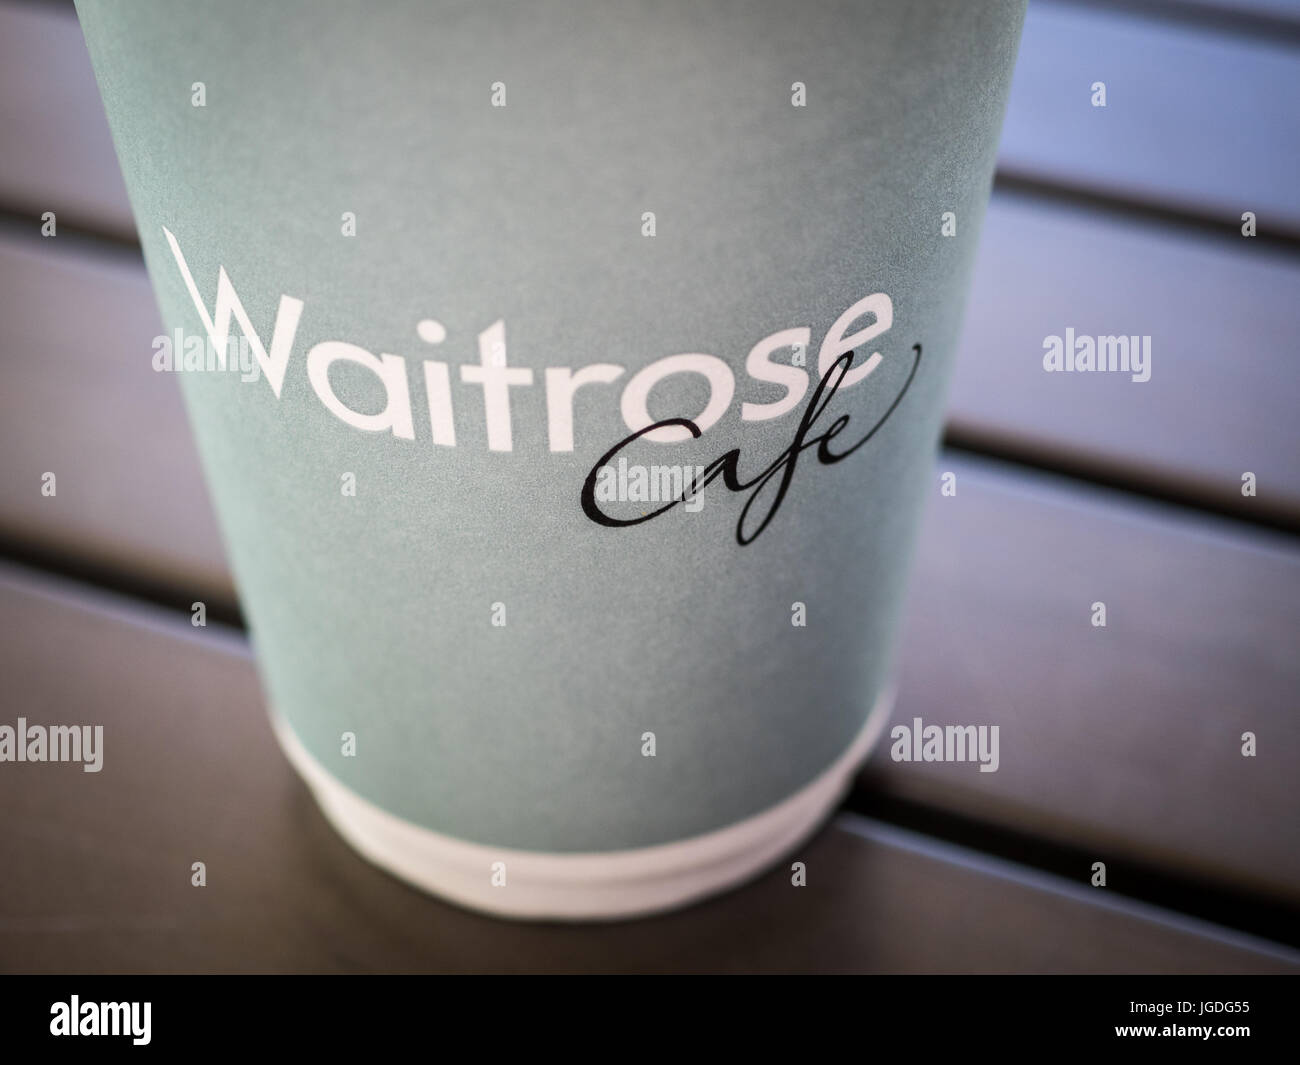 Café gratis - Waitrose Waitrose ofrecen café gratis con la compra de marcas Waitrose titulares de la tarjeta. Foto de stock